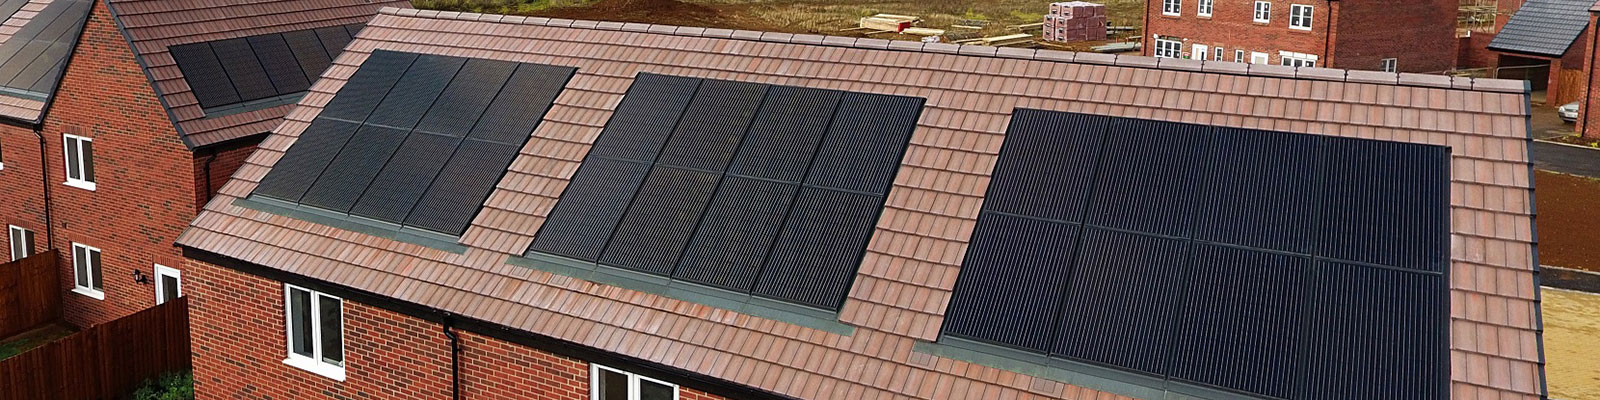 Solar Panel Installers across Glasgow